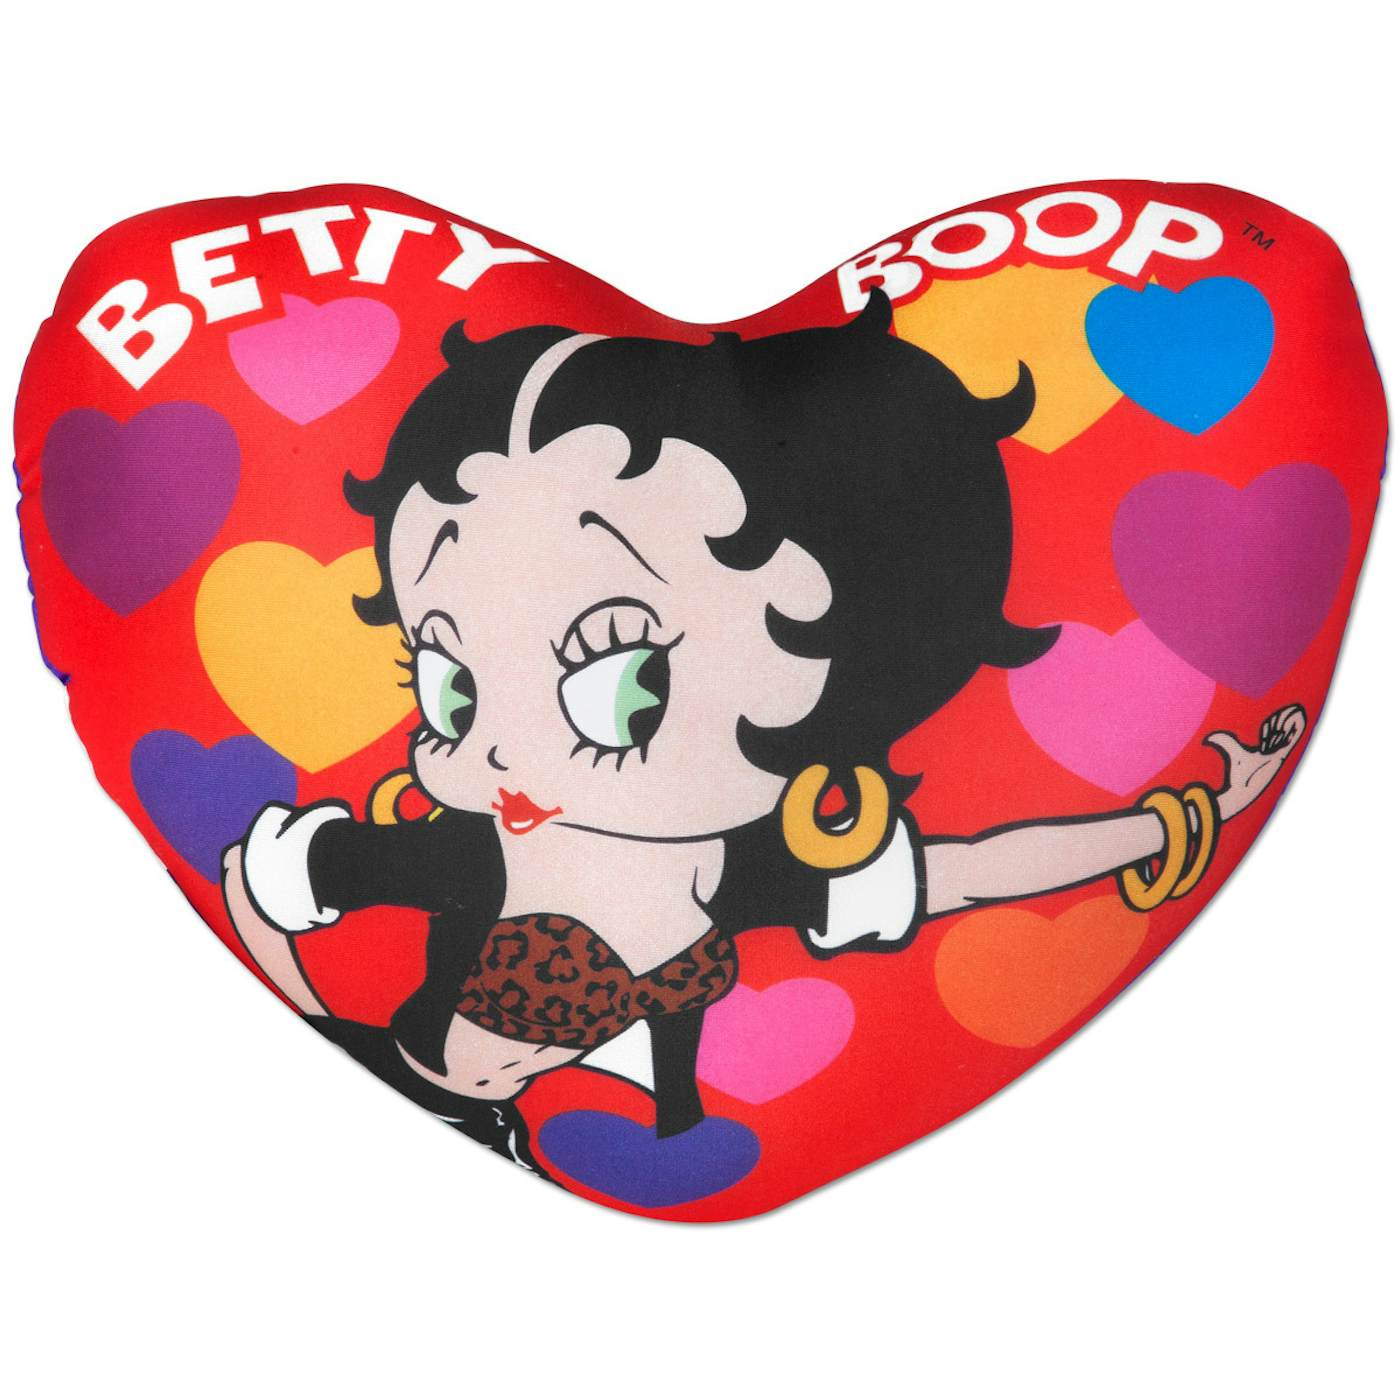 Betty Boop Heart Shaped Microbead Pillow